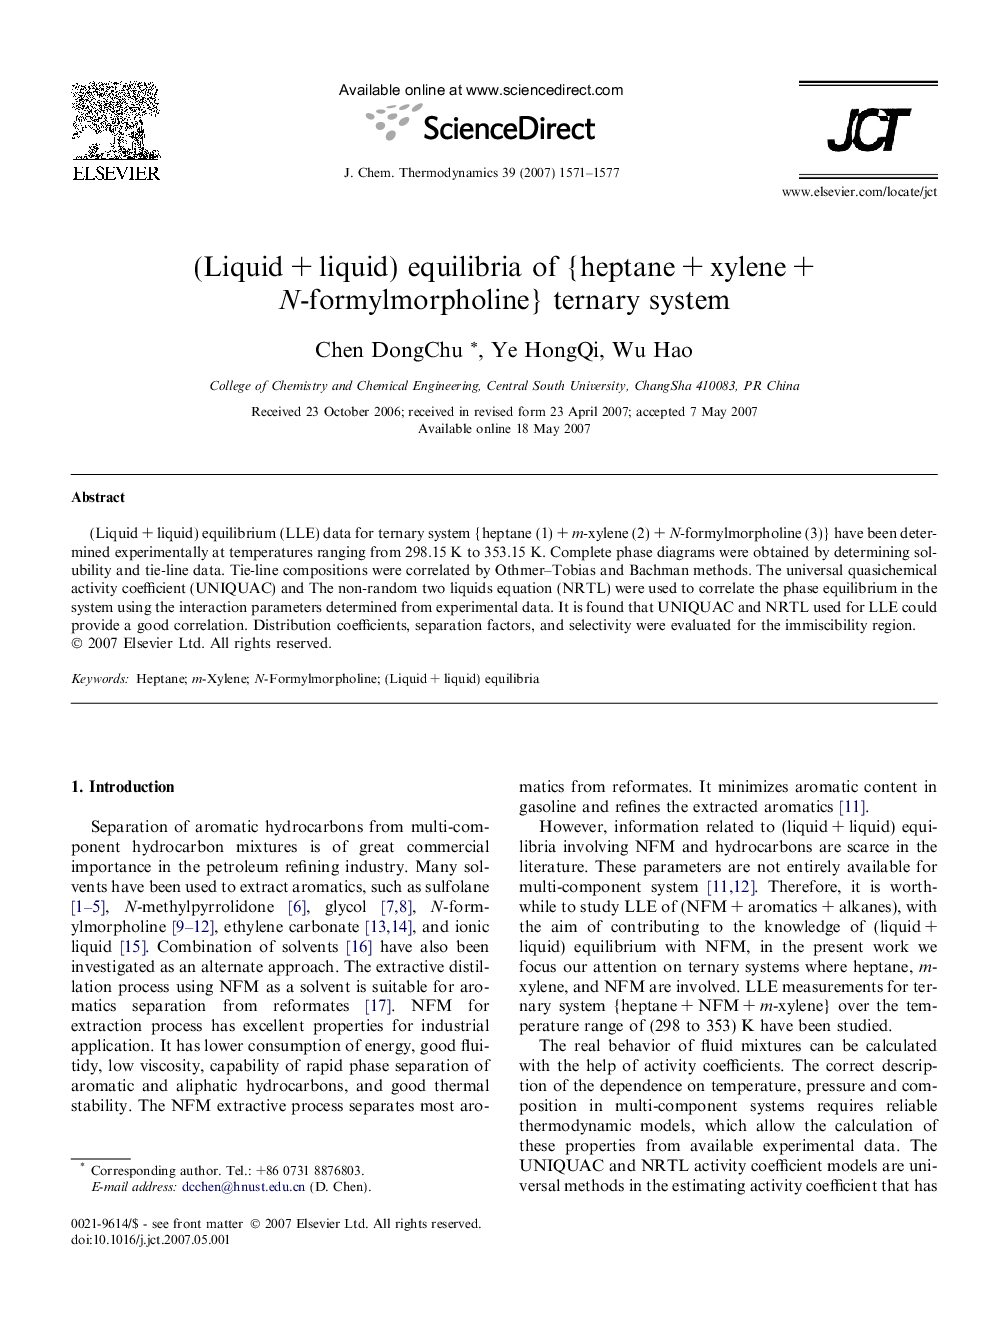 (Liquid + liquid) equilibria of {heptane + xylene + N-formylmorpholine} ternary system